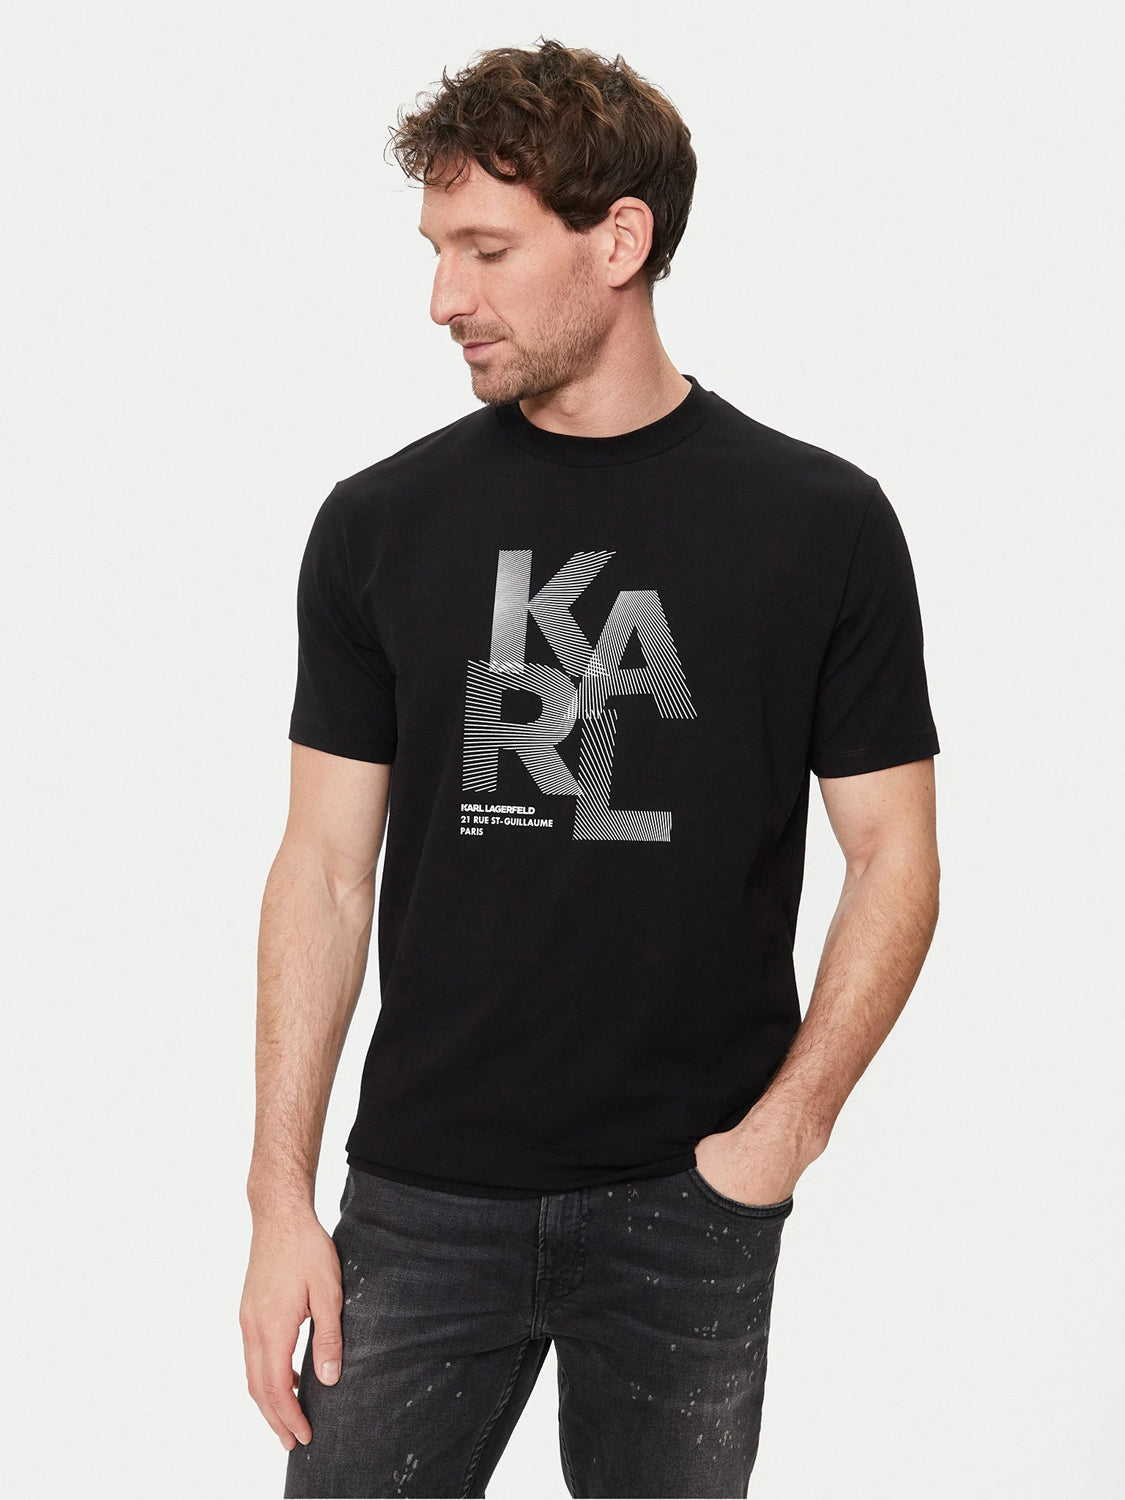 Karl Lagerfeld T Shirt Kl755037 Black Preto_shot3